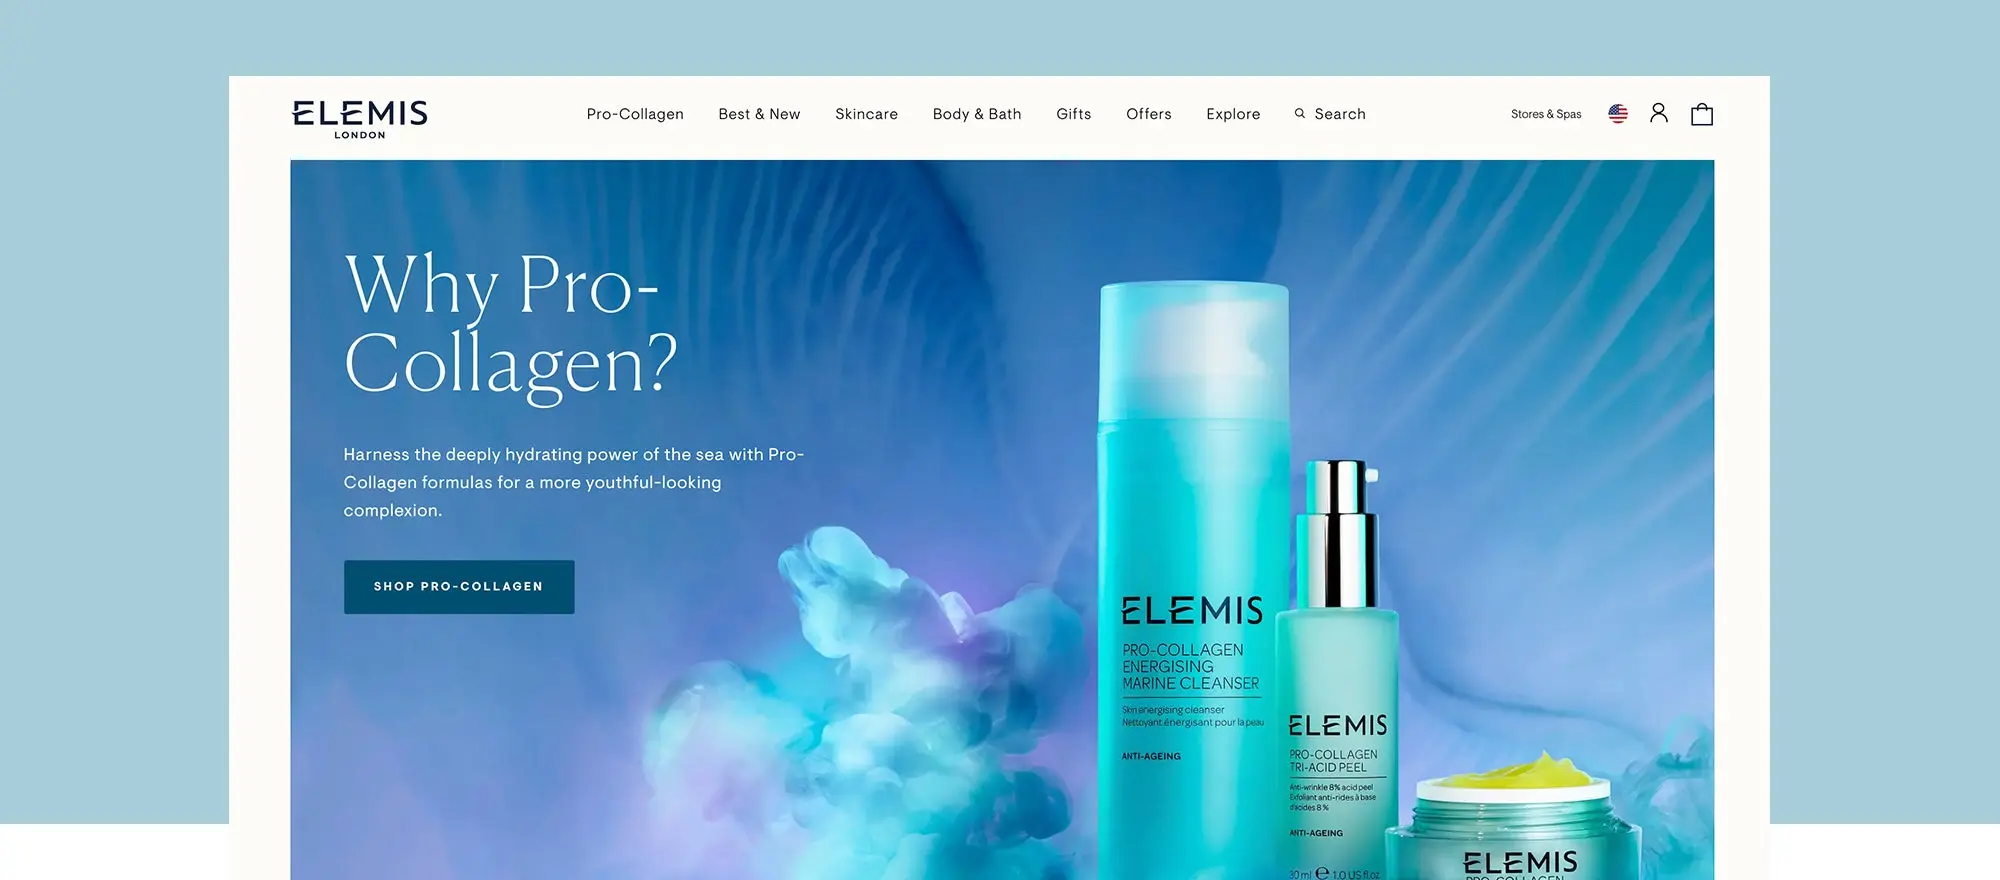 Image of Elemis' "Pro-Collagen" skincare products